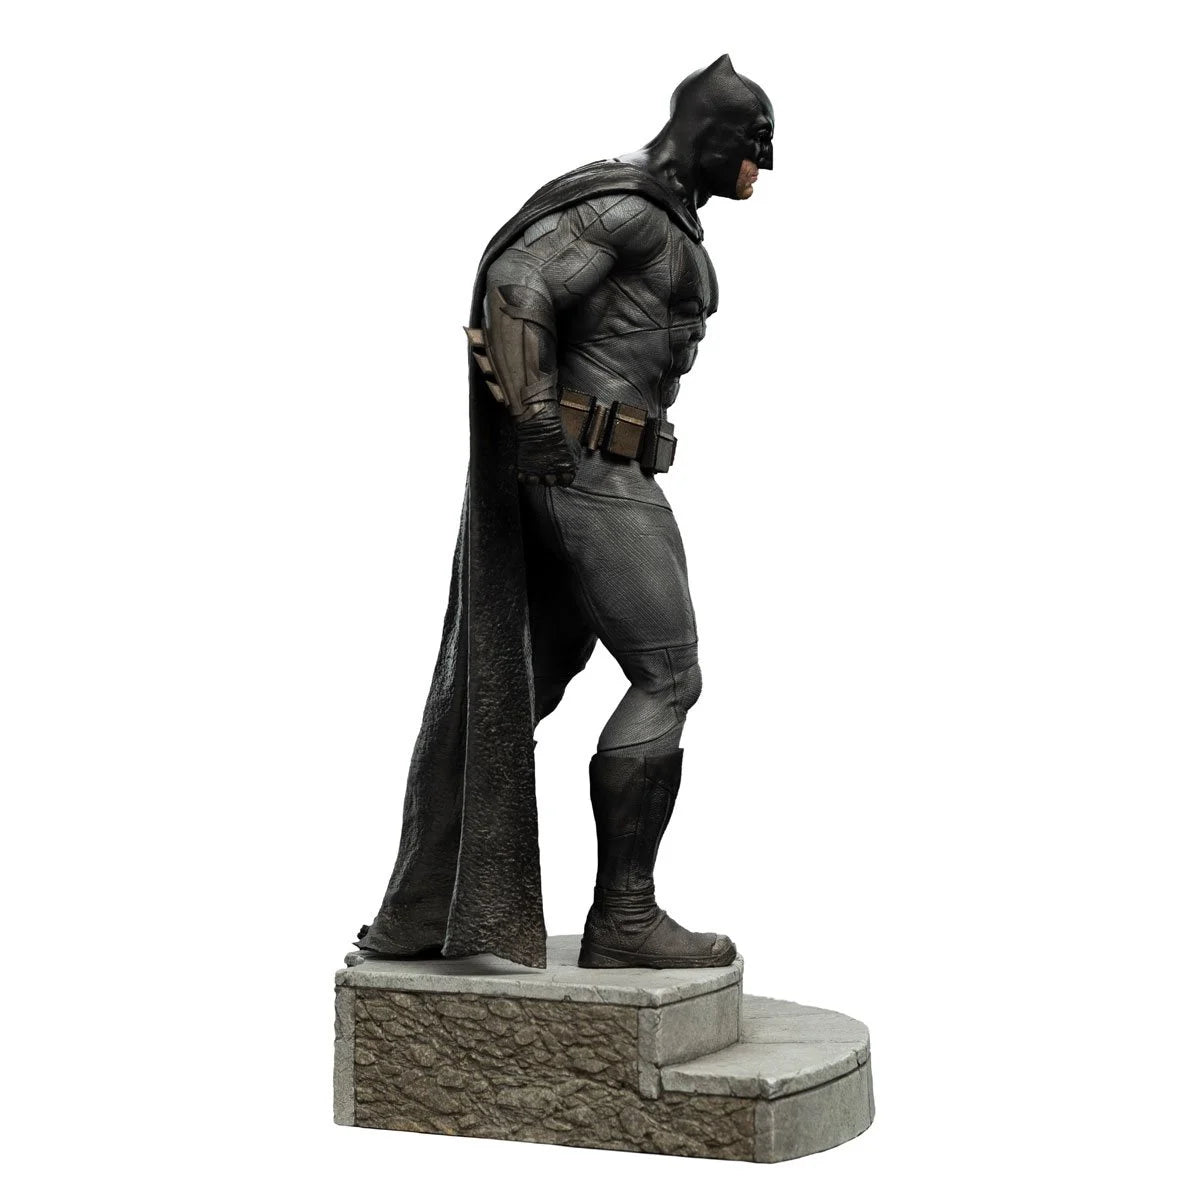 Zack Snyder's Justice League Batman Trinity Series 1:6 Scale Statue by Weta Workshop -Weta Workshop - India - www.superherotoystore.com